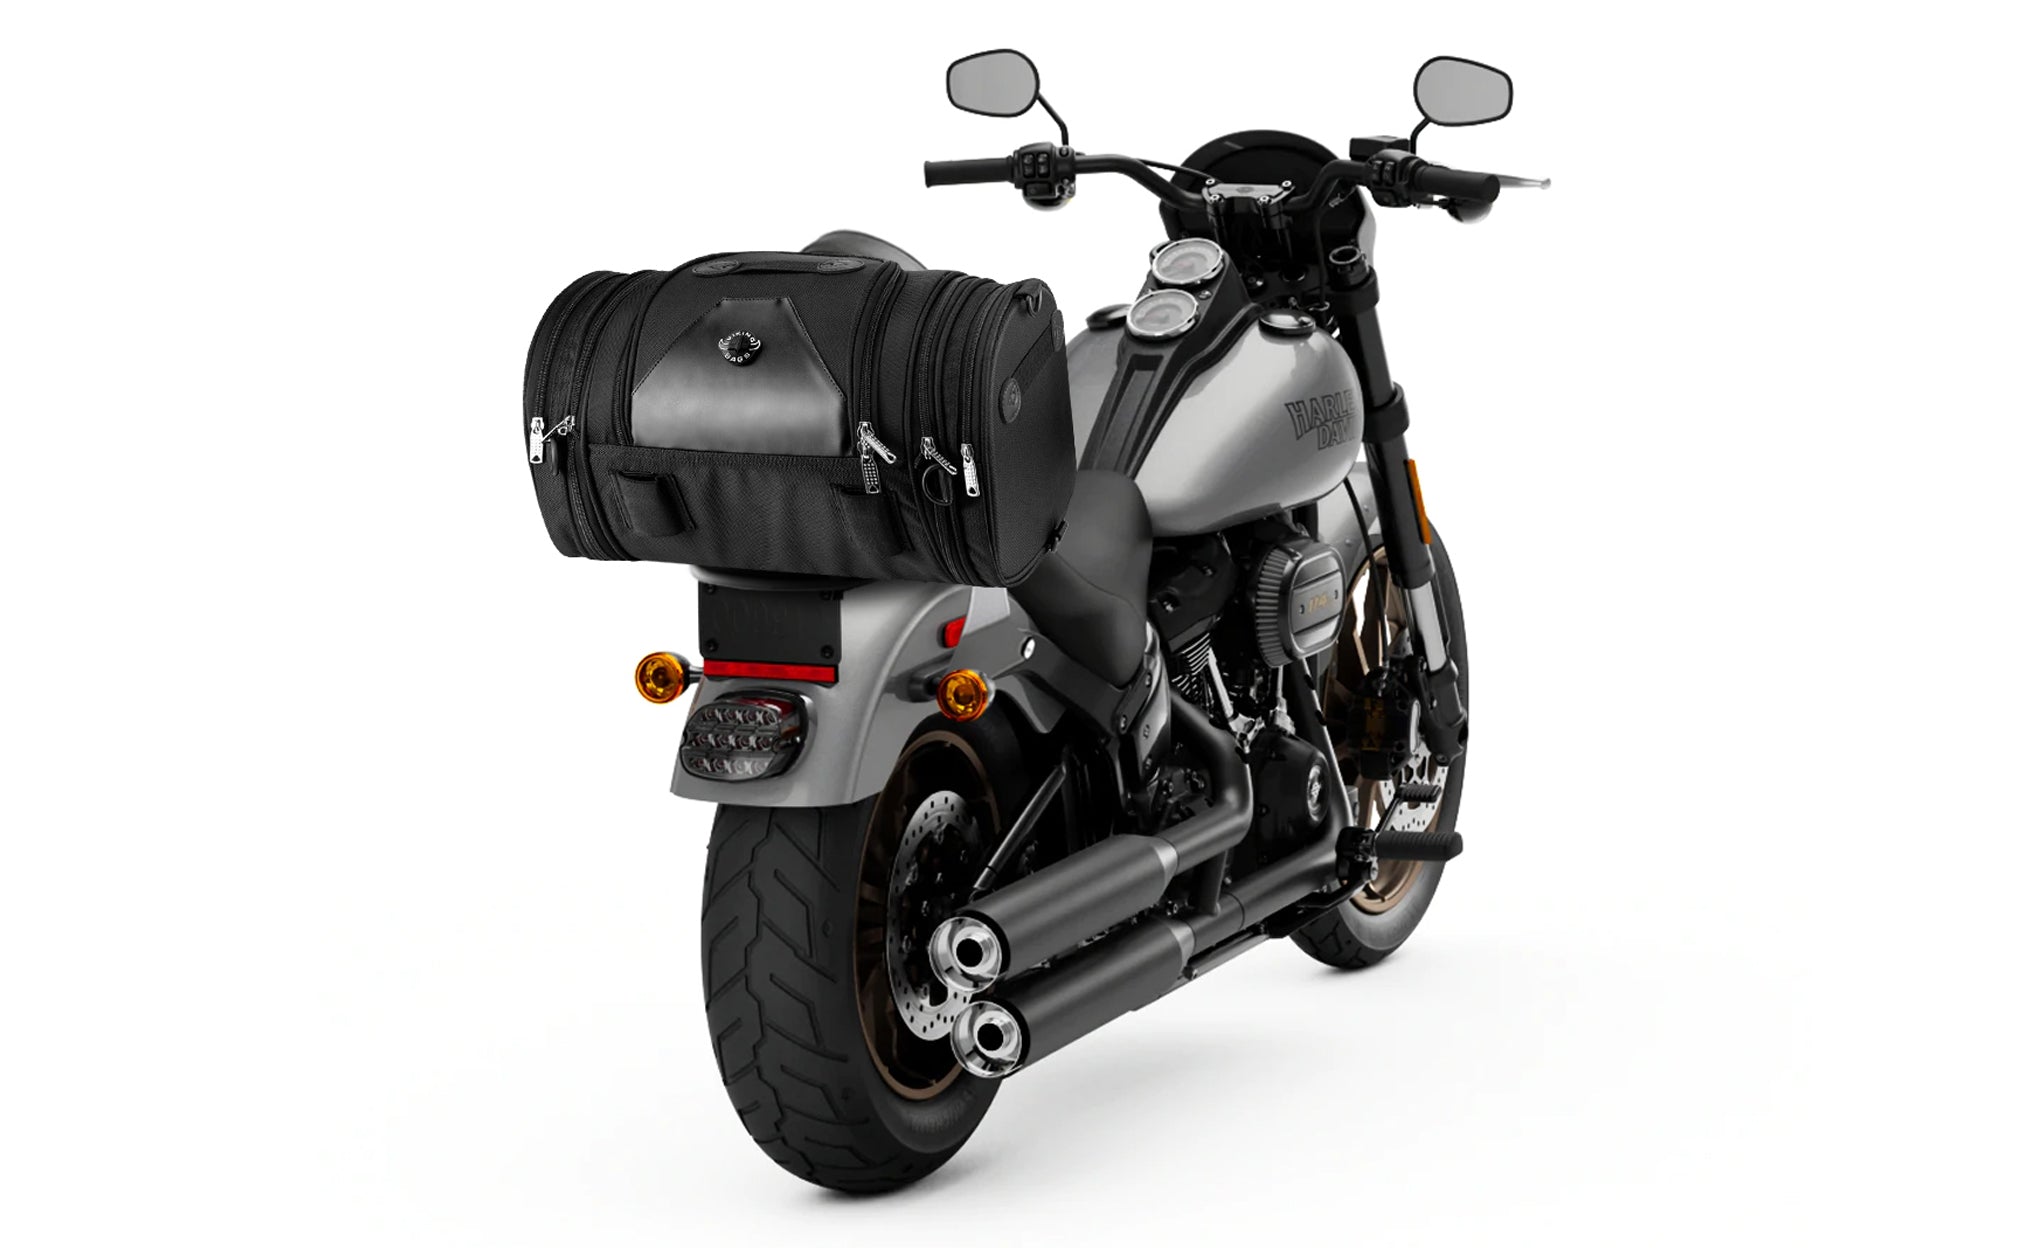 Viking Axwell Small Suzuki Motorcycle Tail Bag Bag on Bike View @expand